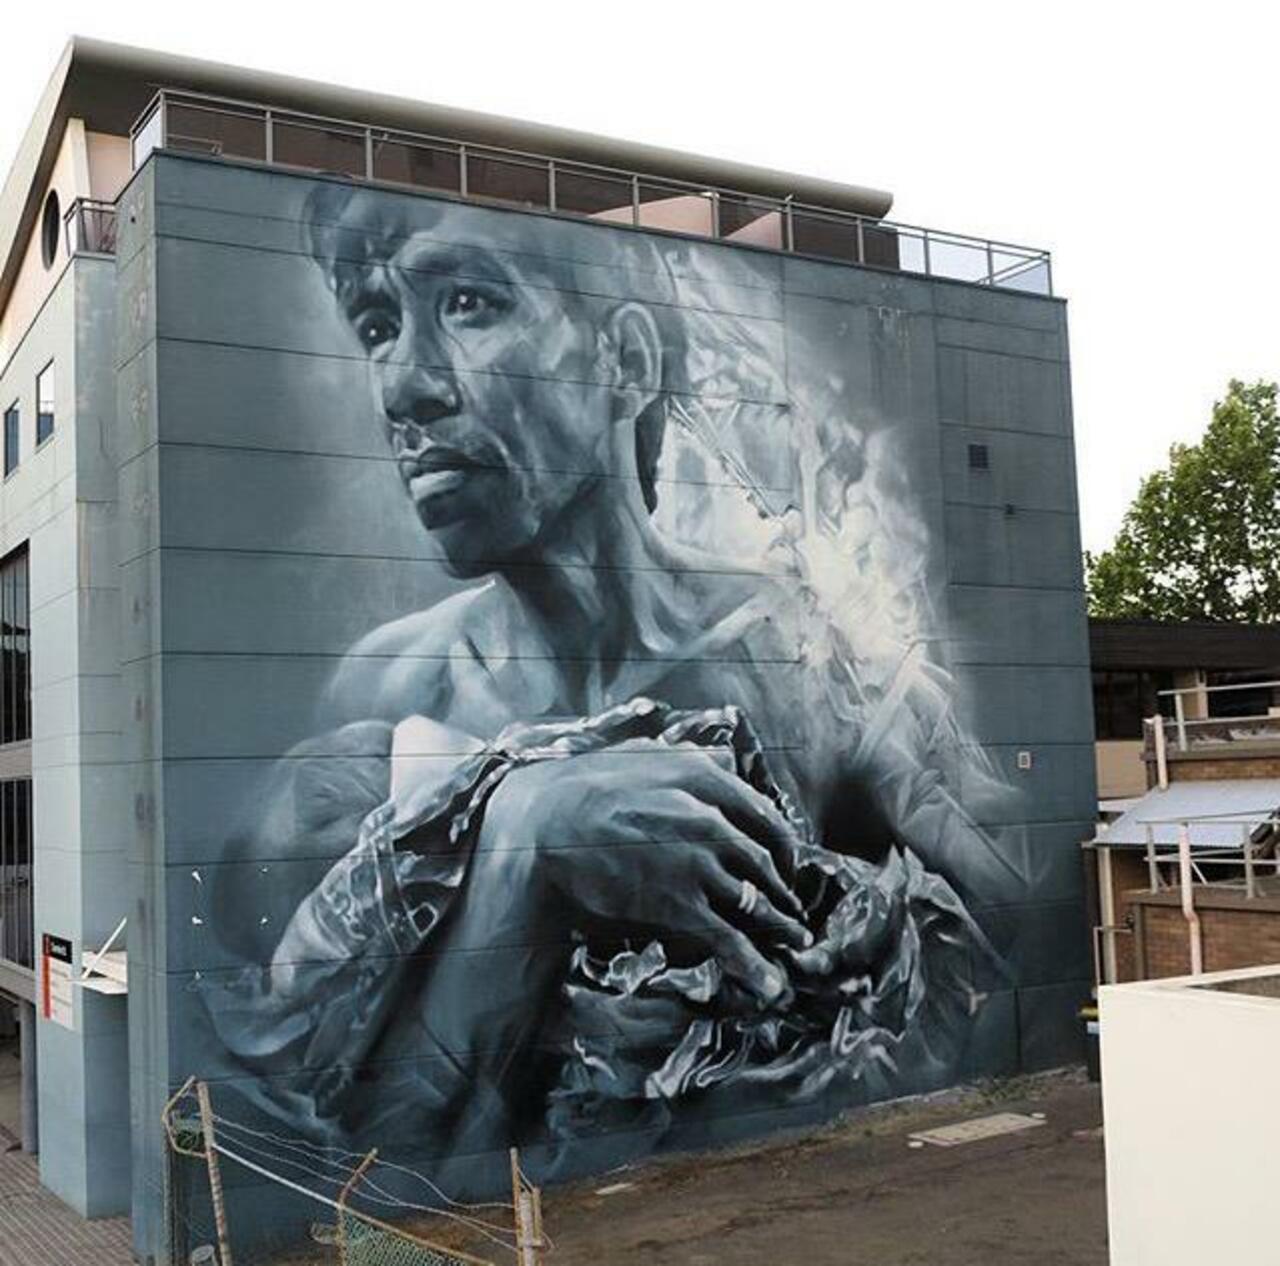 New Street Art by Guido Van Helten in Wollongong Australia 

#art #graffiti #mural #streetart http://t.co/BawRJR6zAH